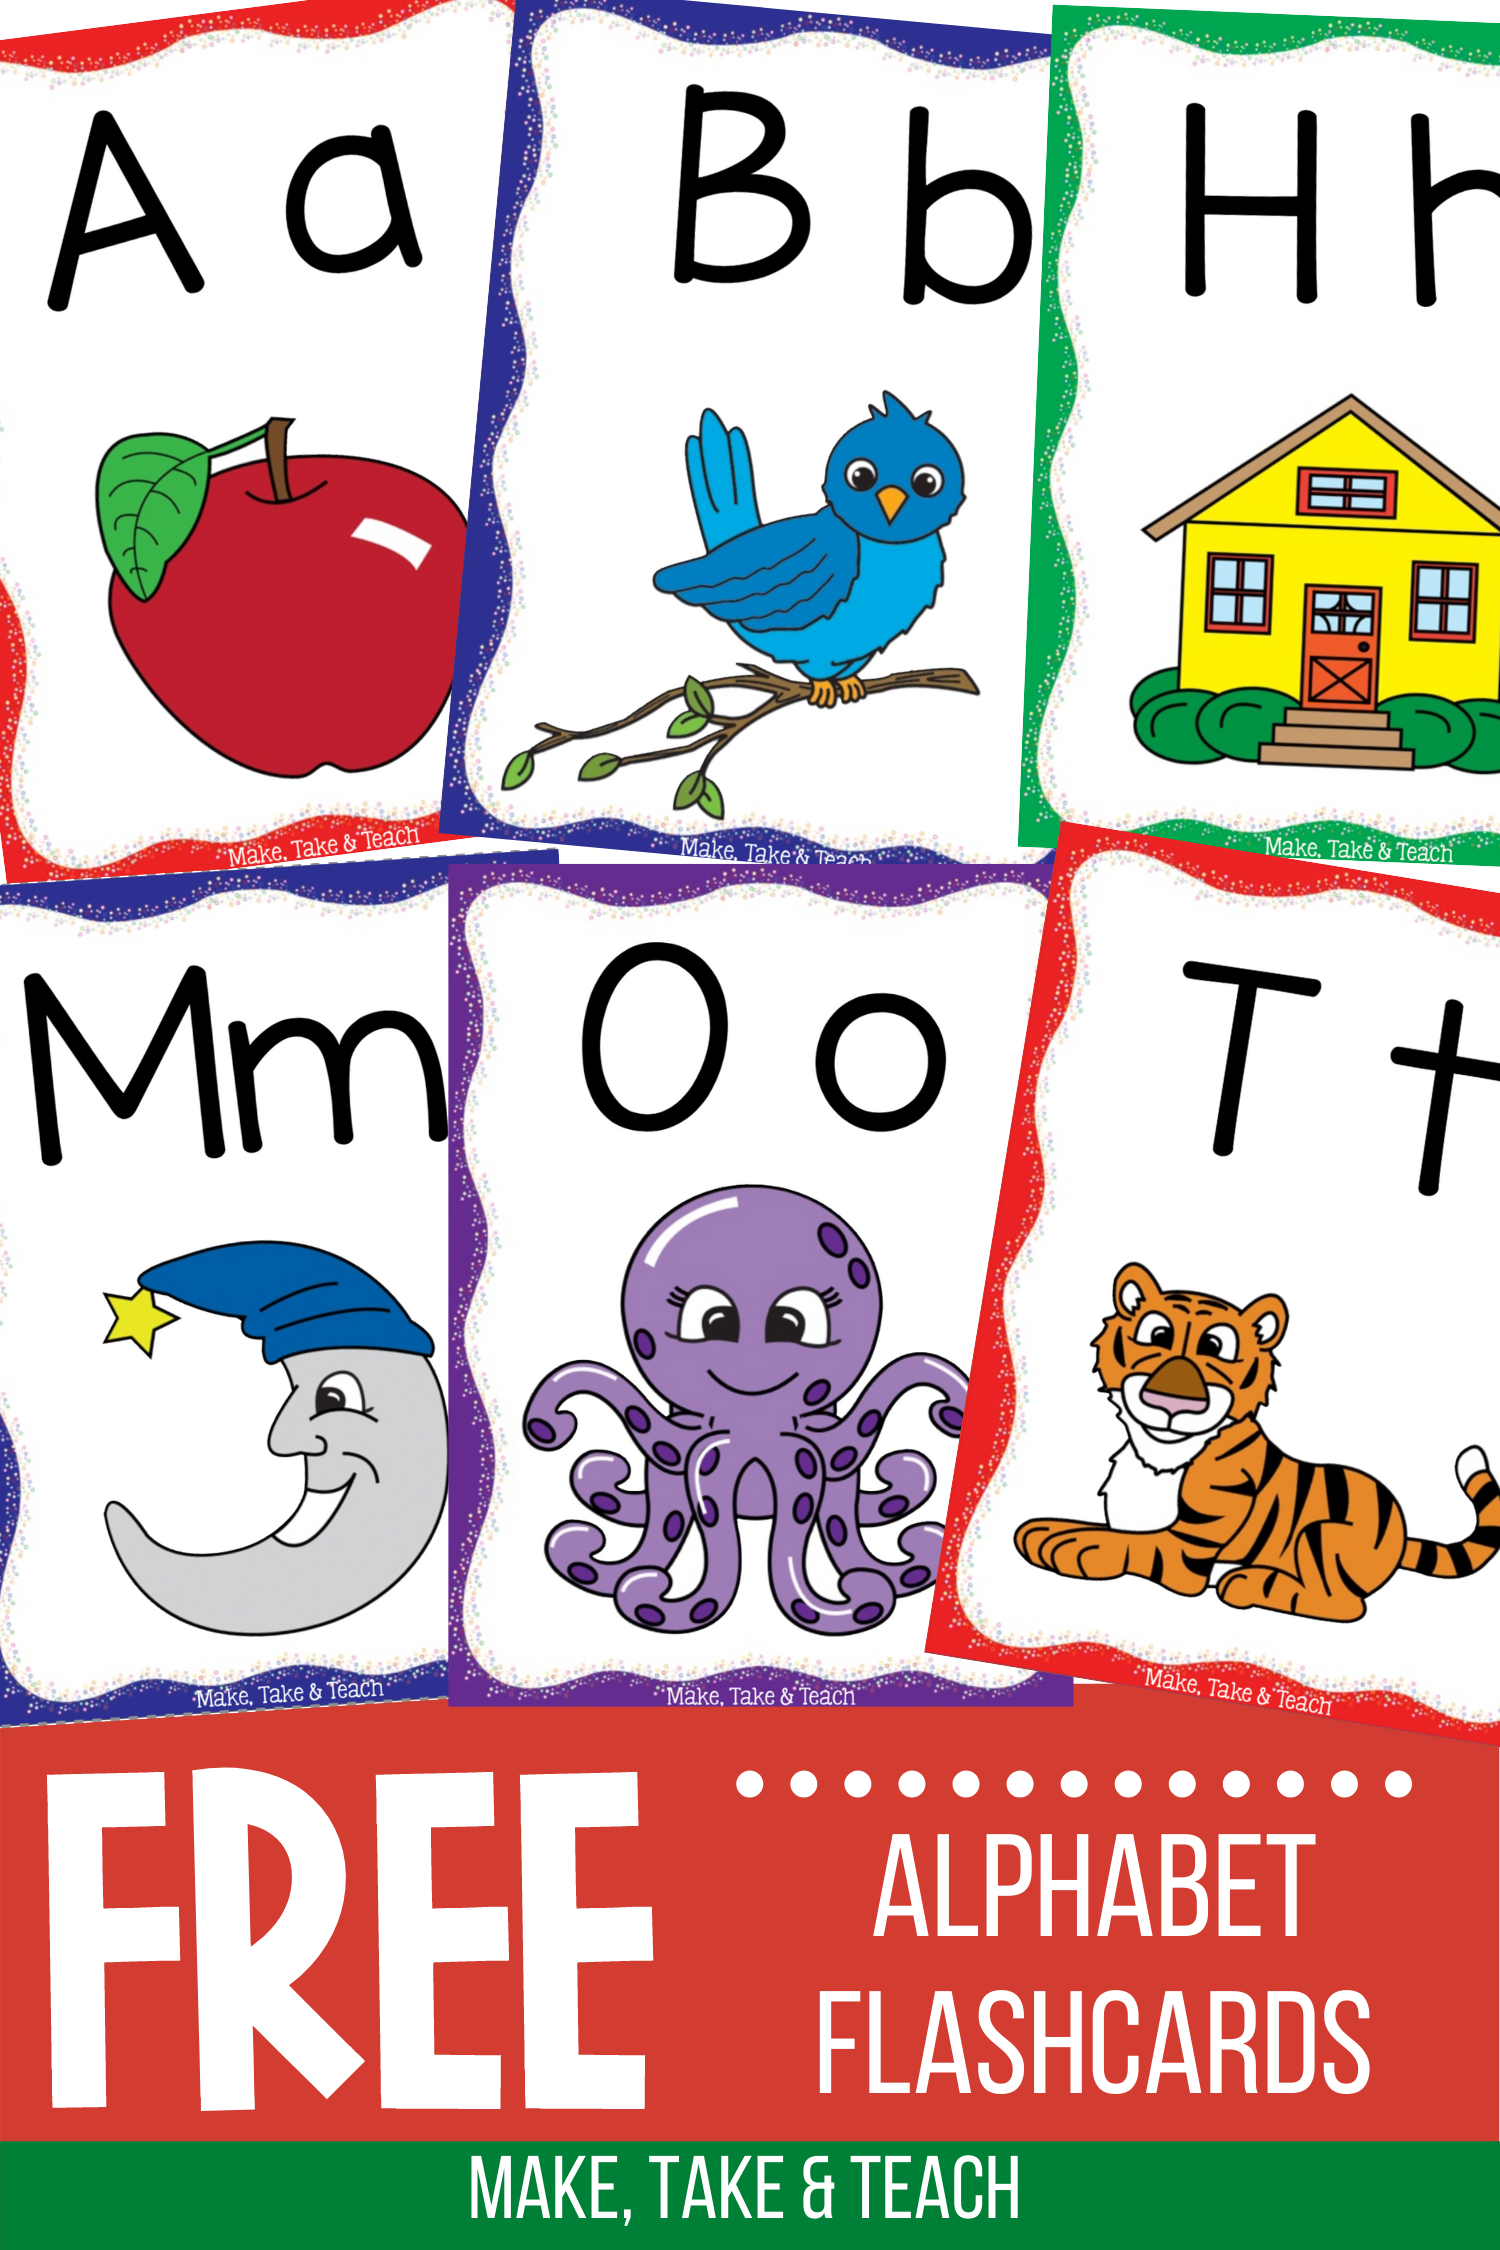 free-alphabet-flashcards-with-keywords-make-take-teach